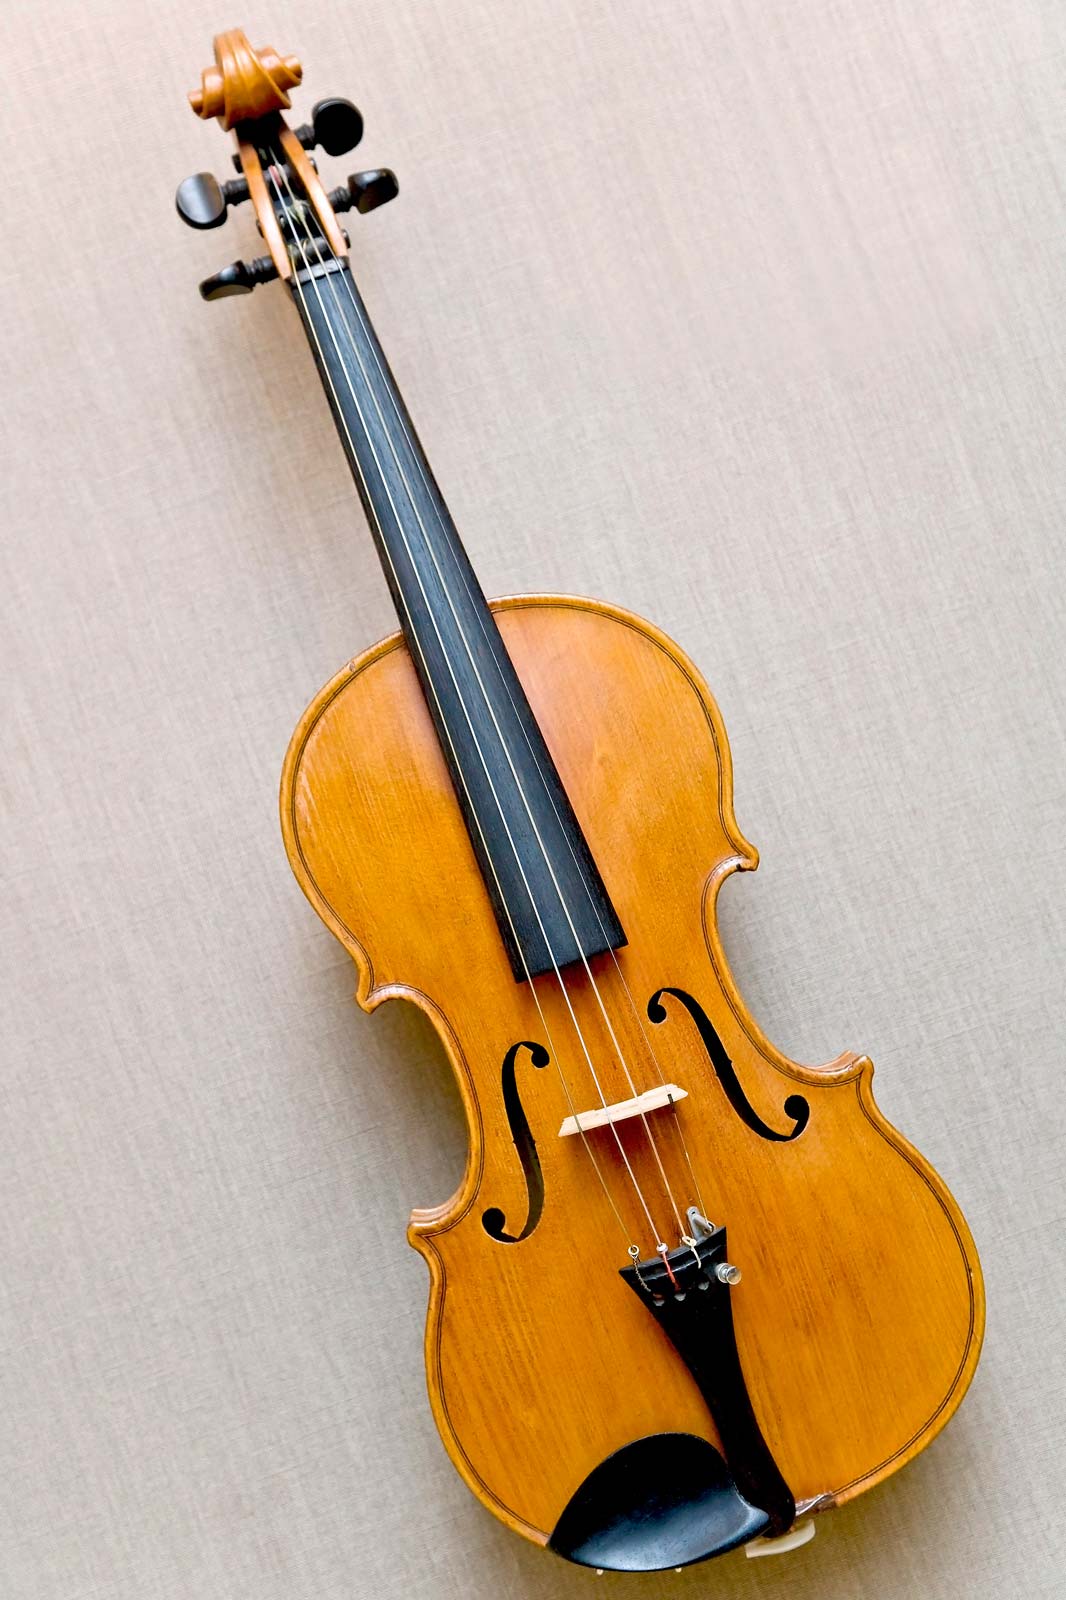 National instrument of Cyprus - Violin